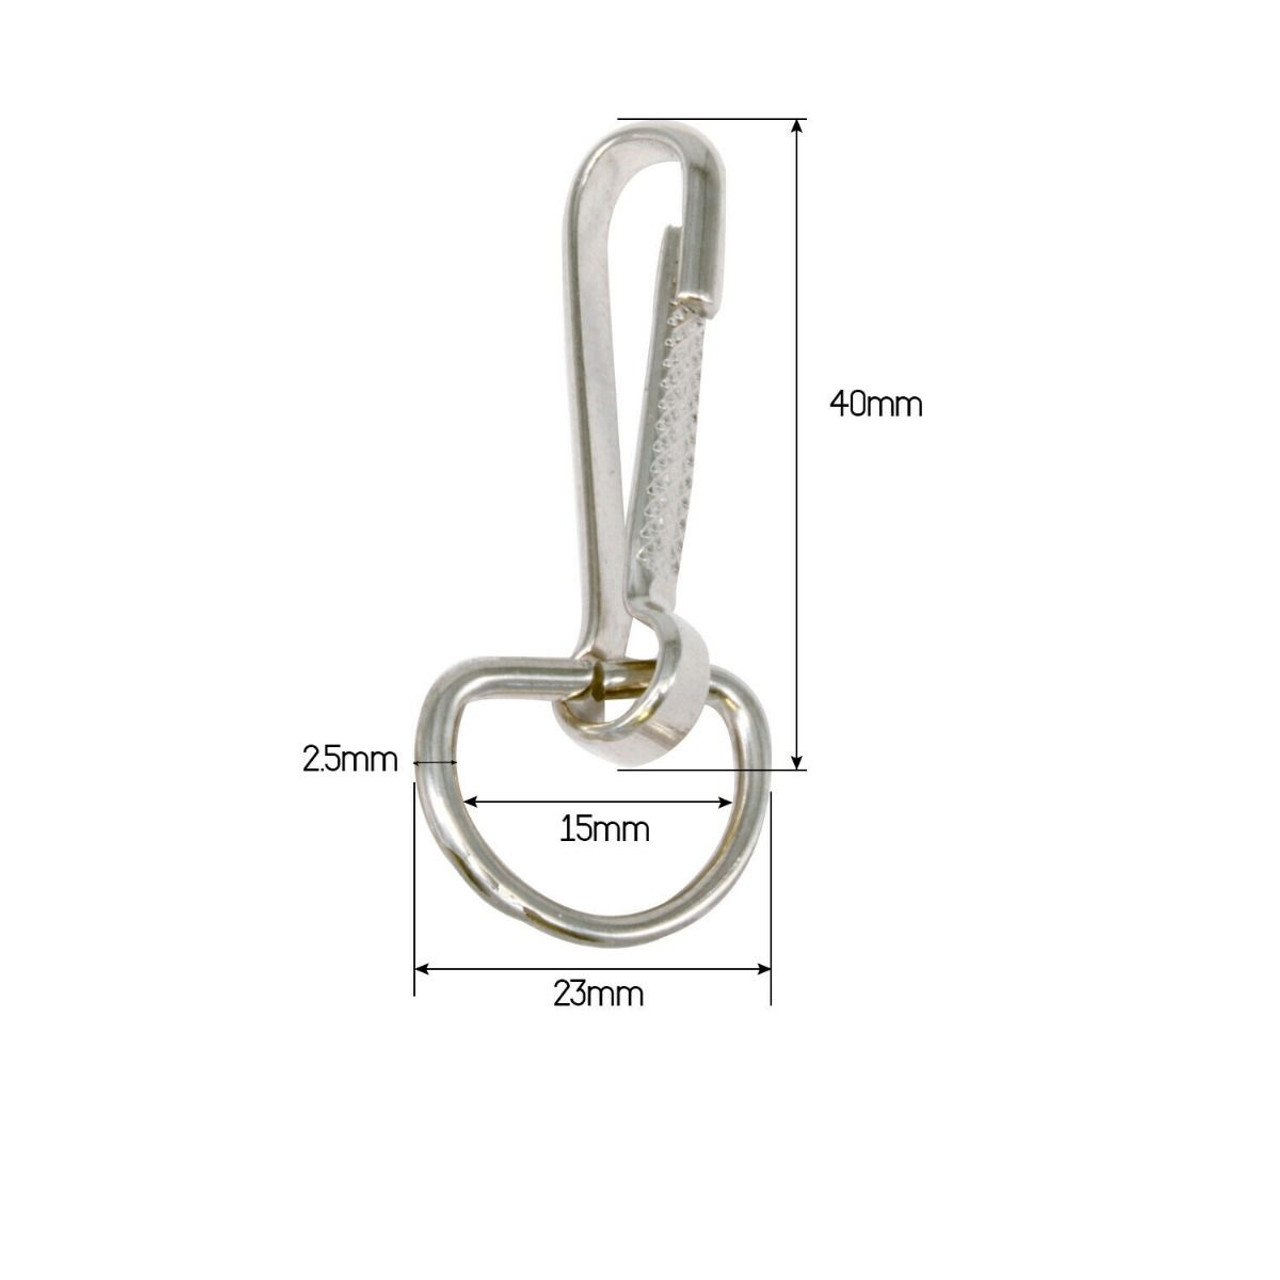 Metal Lanyard Hook with 15mm D-Ring